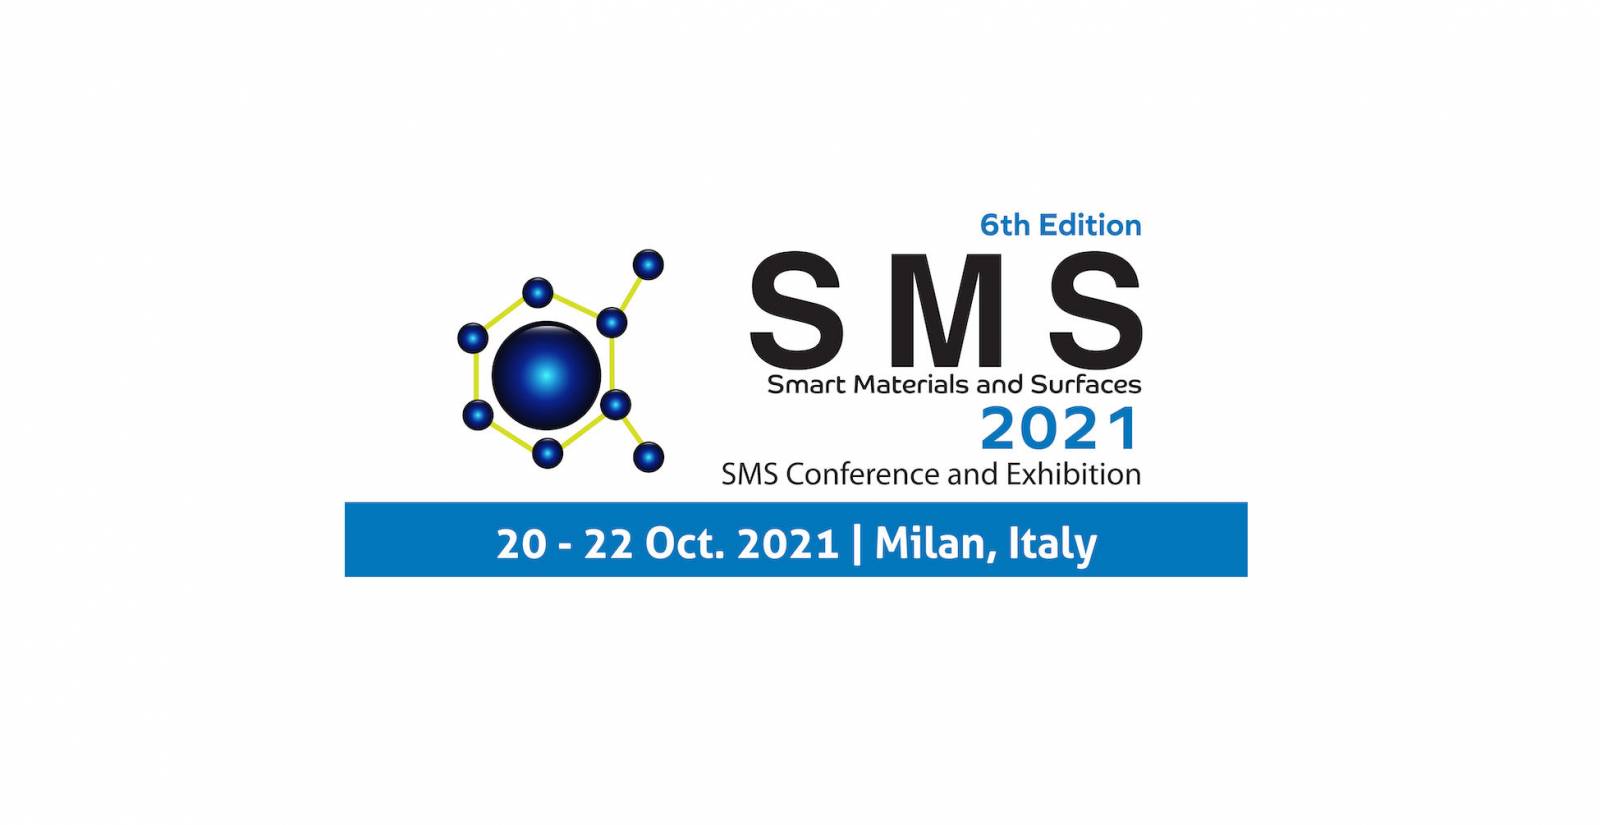 SMS2021 confrence logo